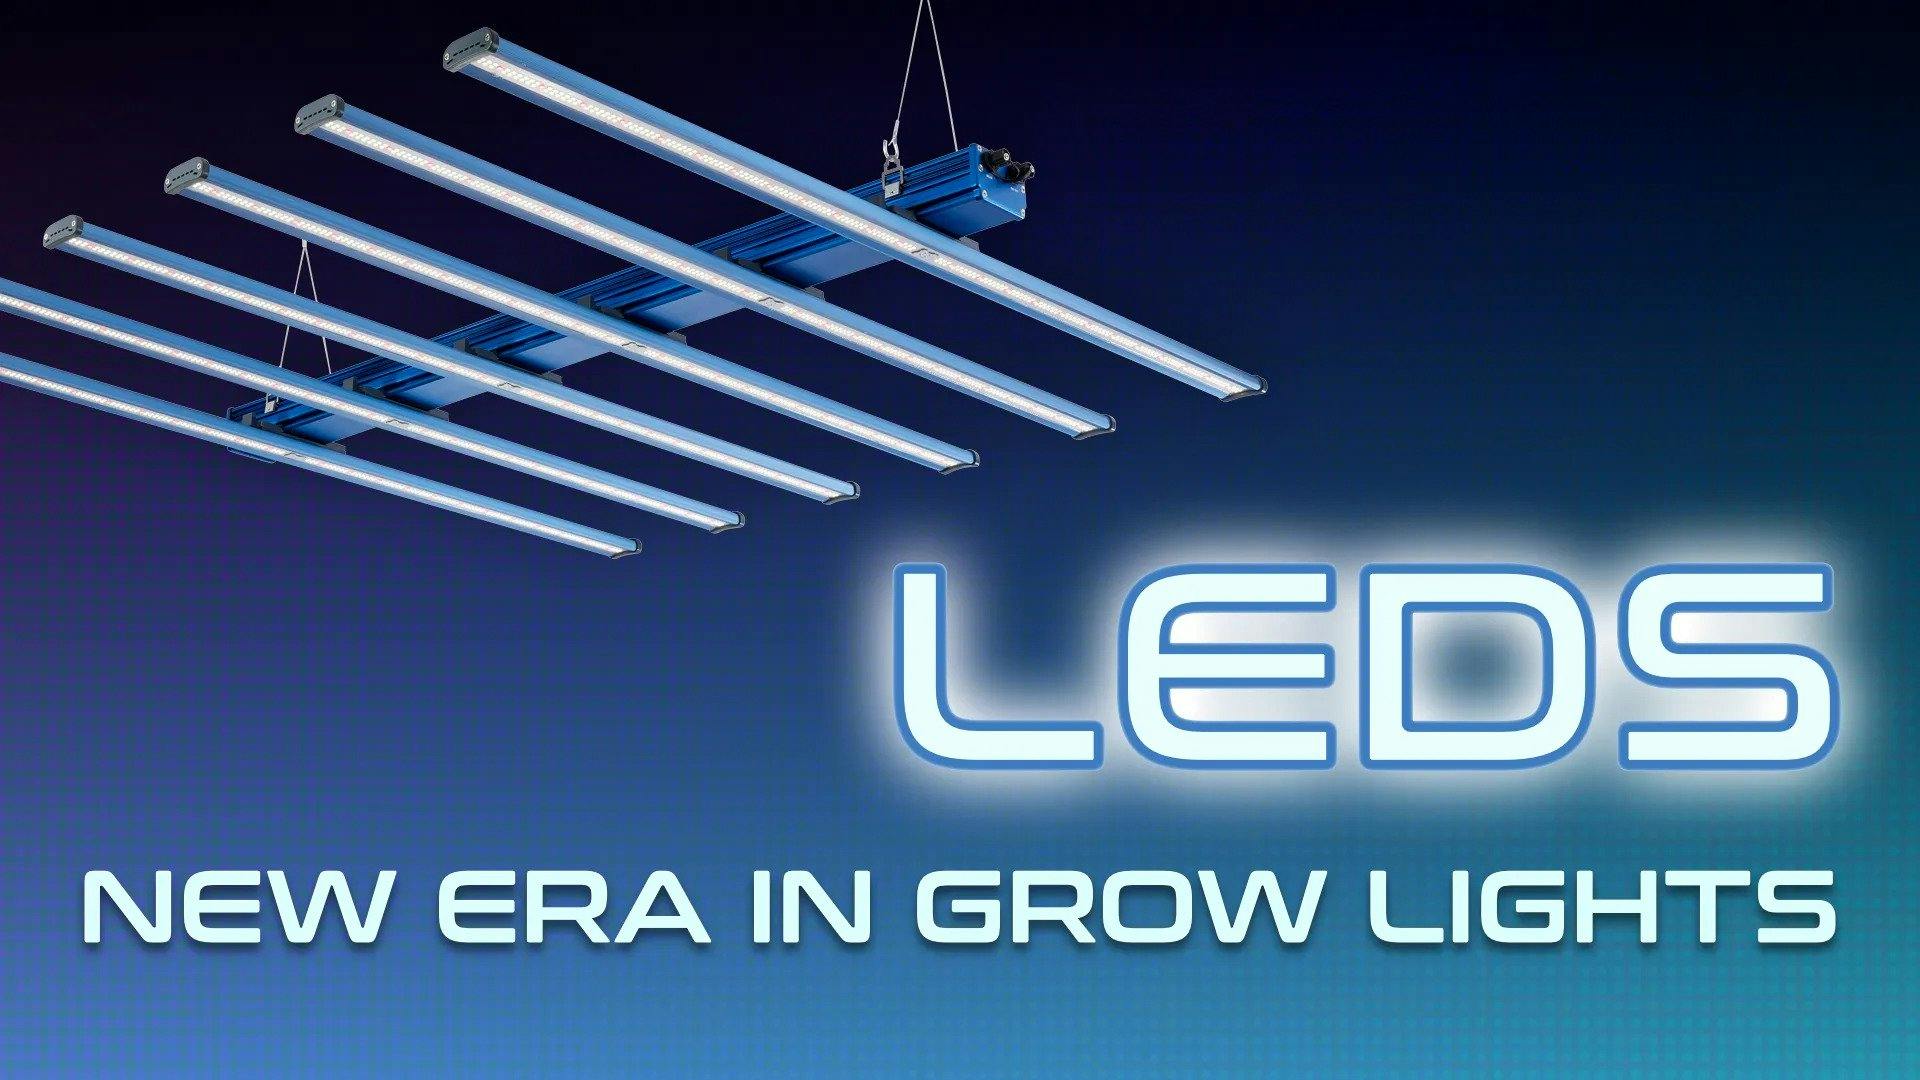 Buy LED lights. New era in grow lights